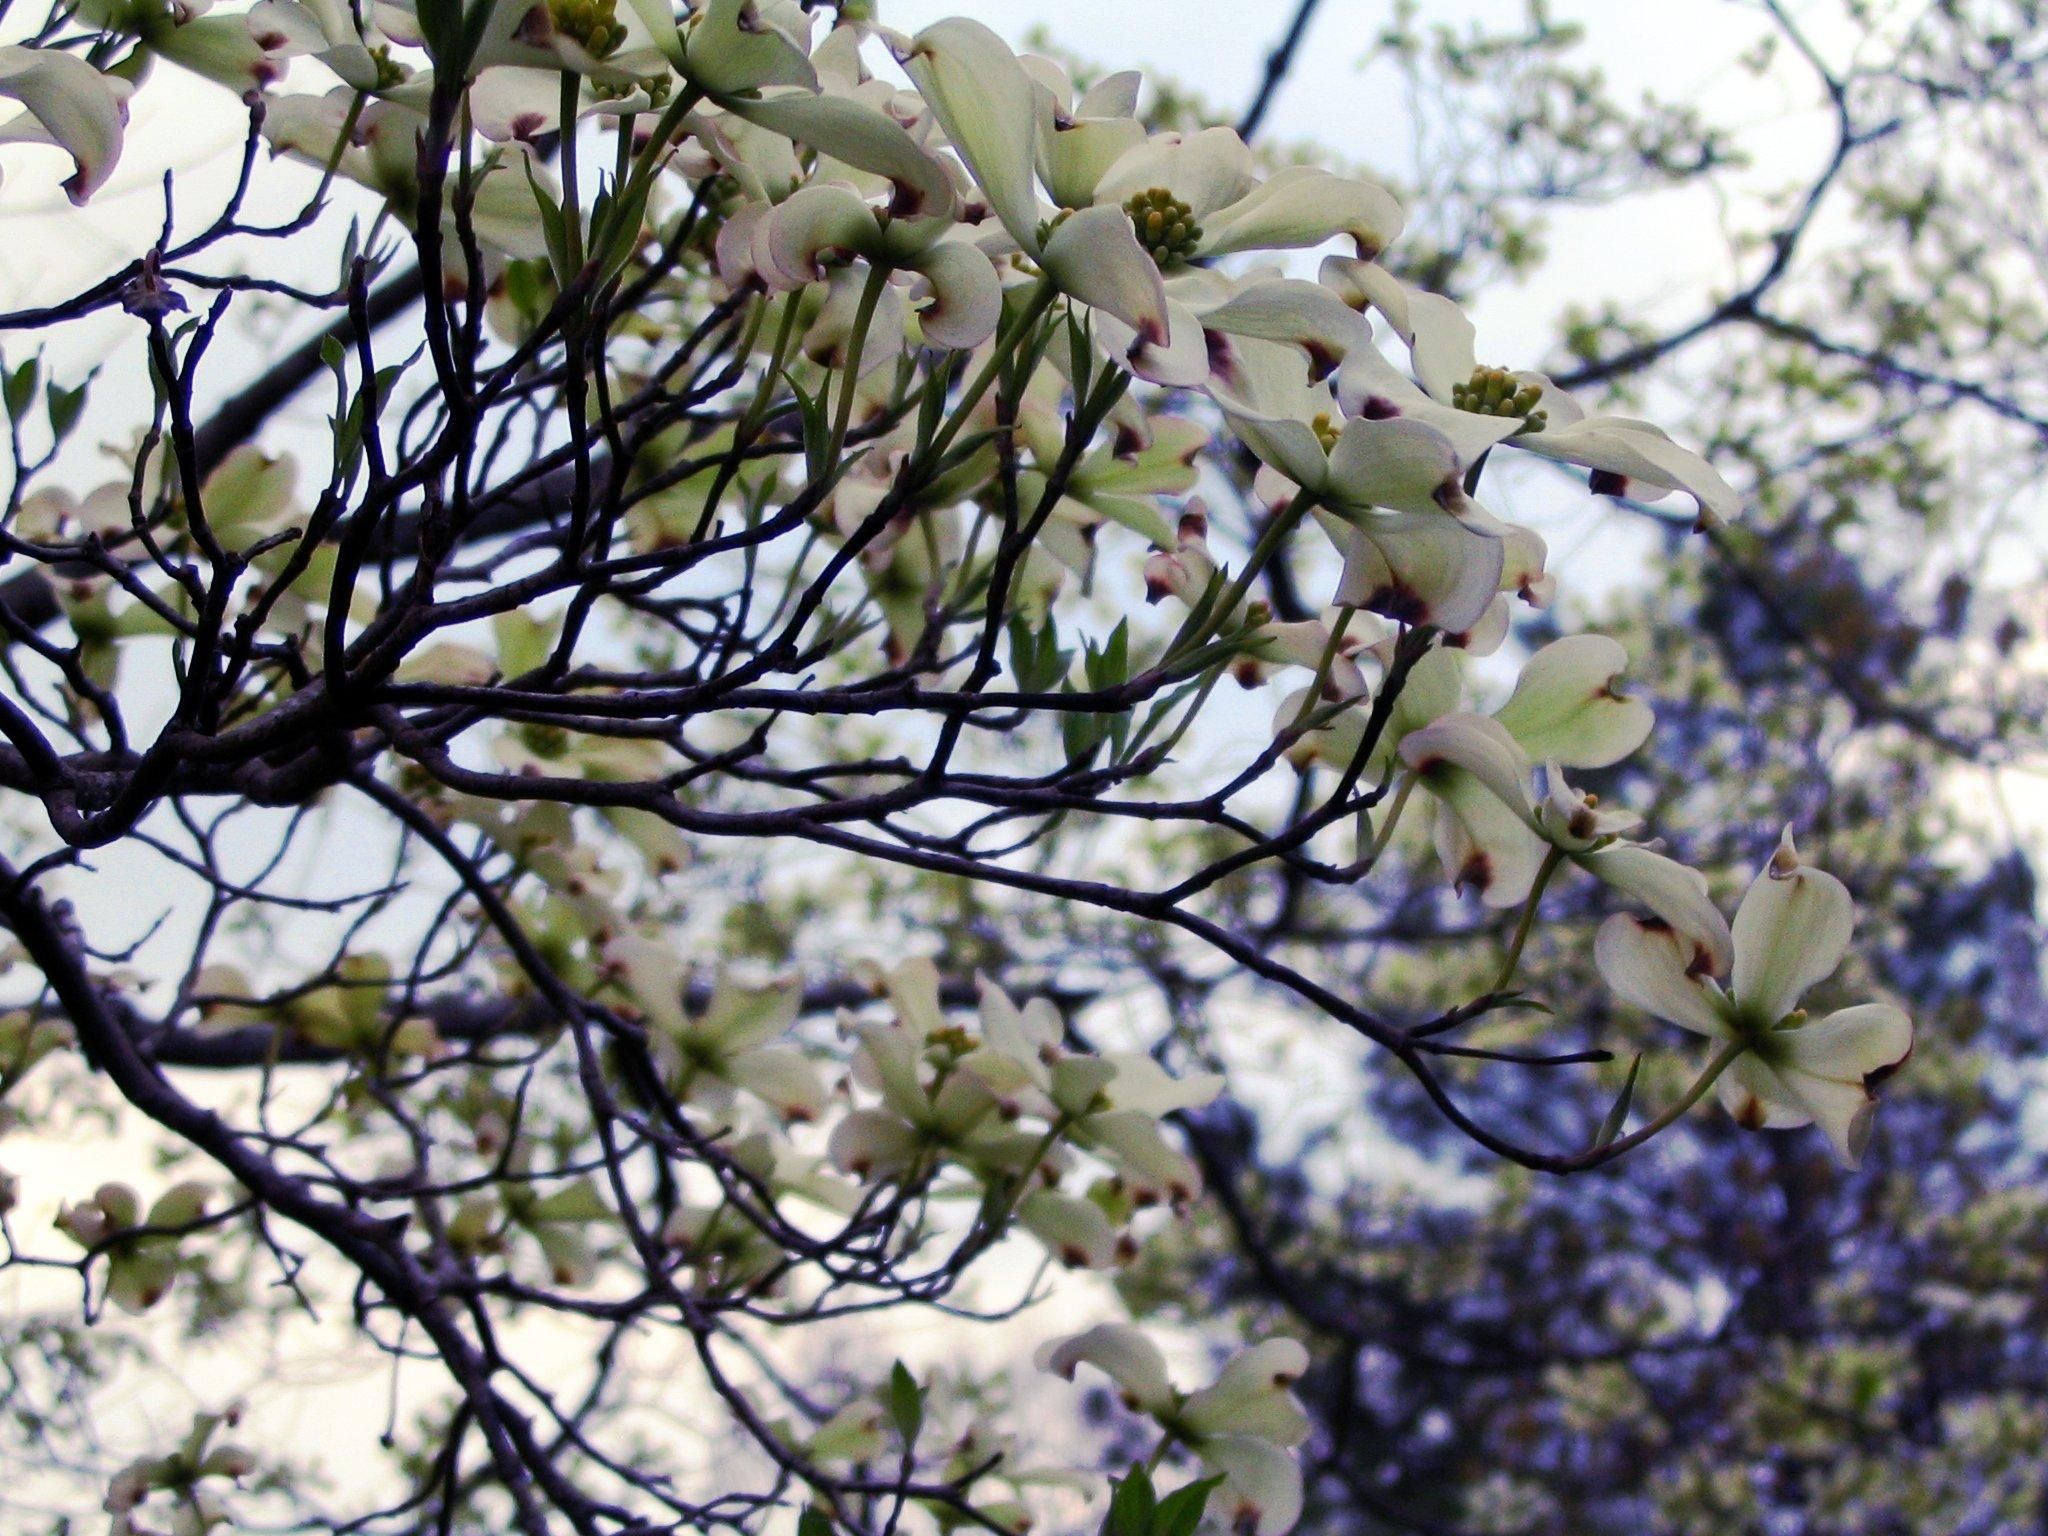 File:Dogwood tree in bloom.jpg - Wikimedia Commons